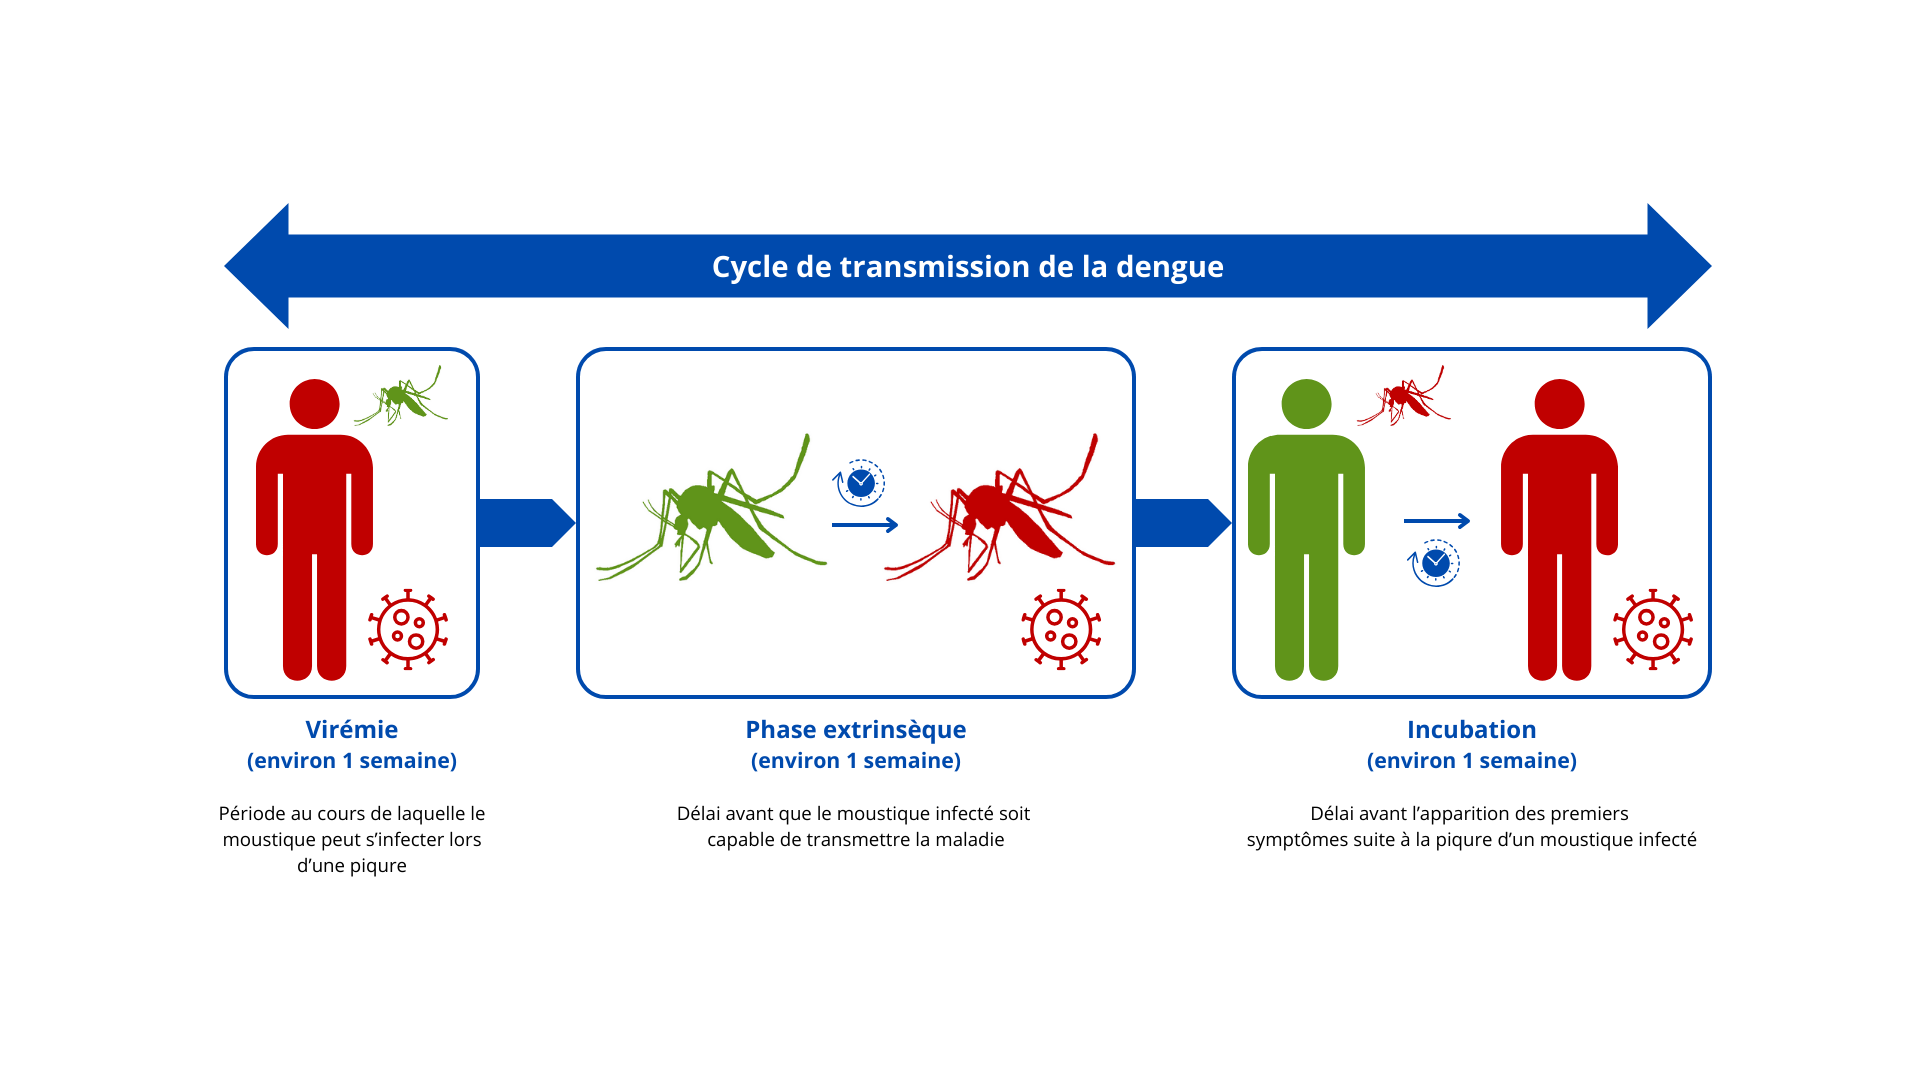 Cycle de transmission de la dengue